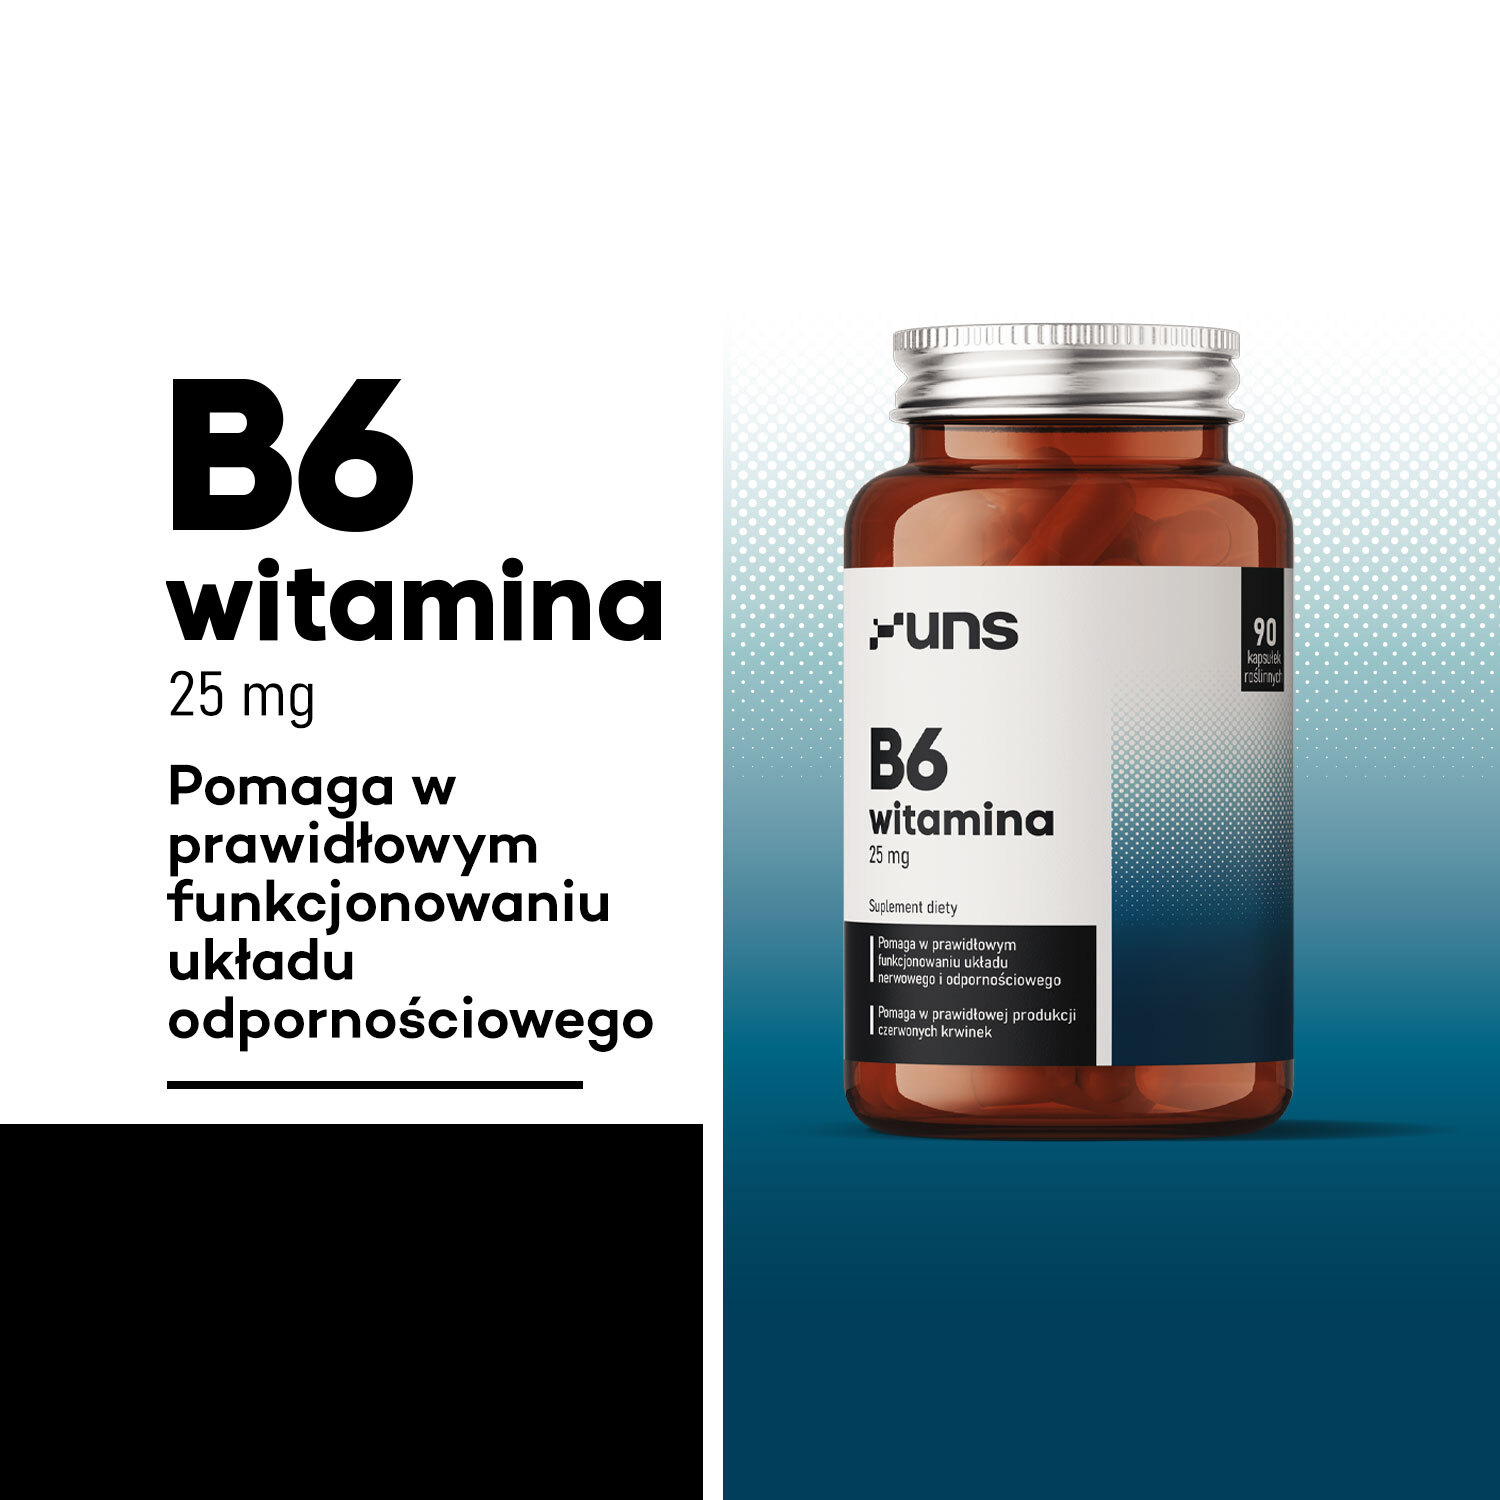 uns witamina b6